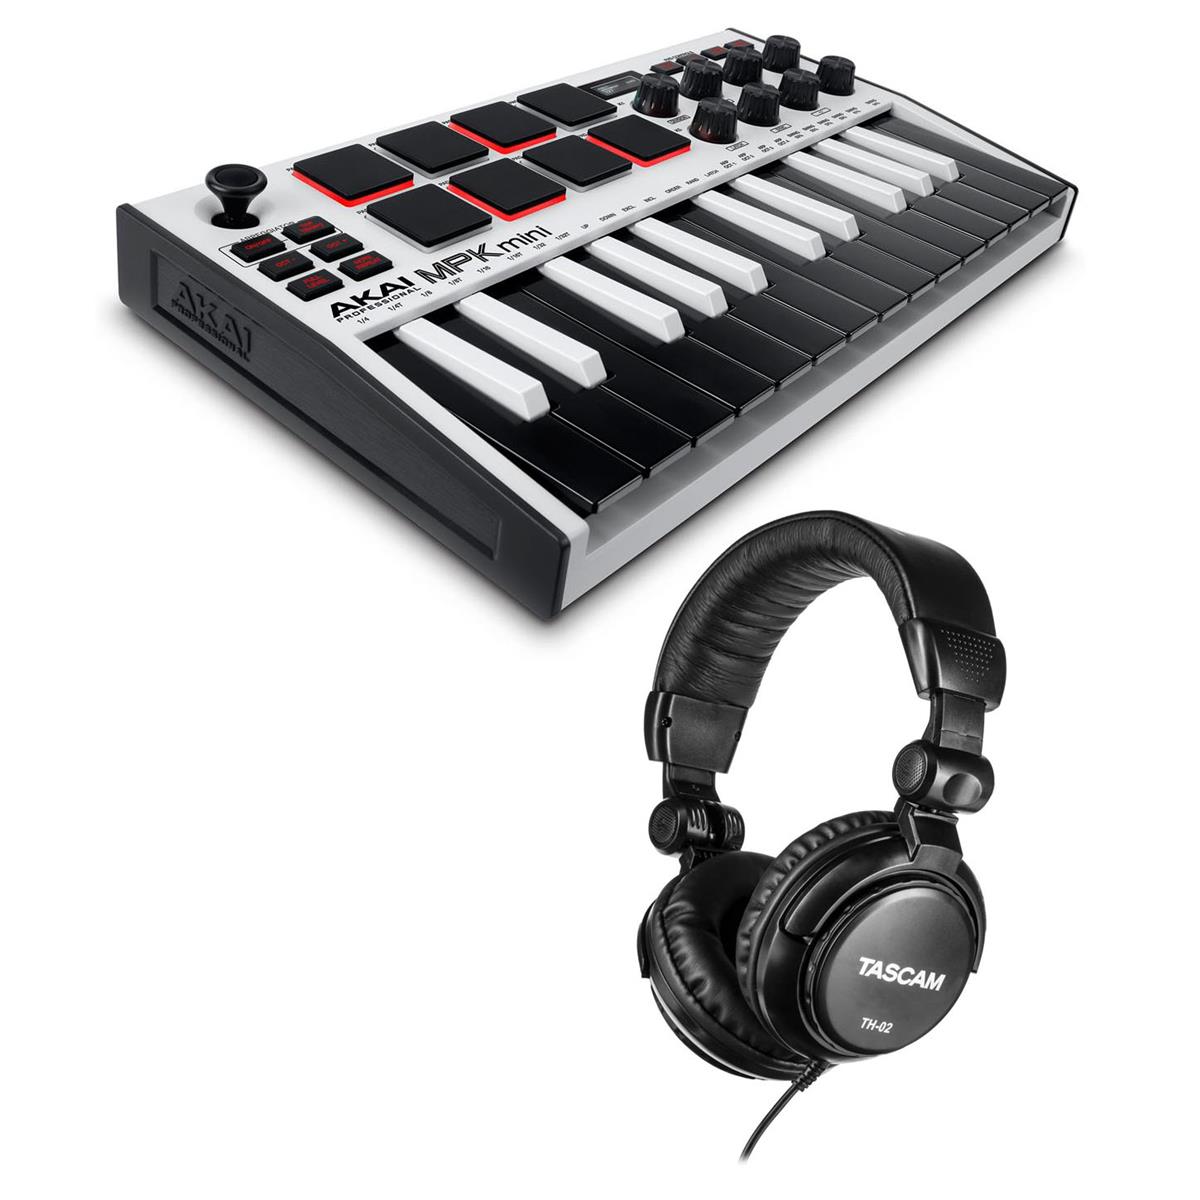 Akai MPK Mini MK3 25-Key MIDI Controller, White with Headphones -  MPKMINI3W A